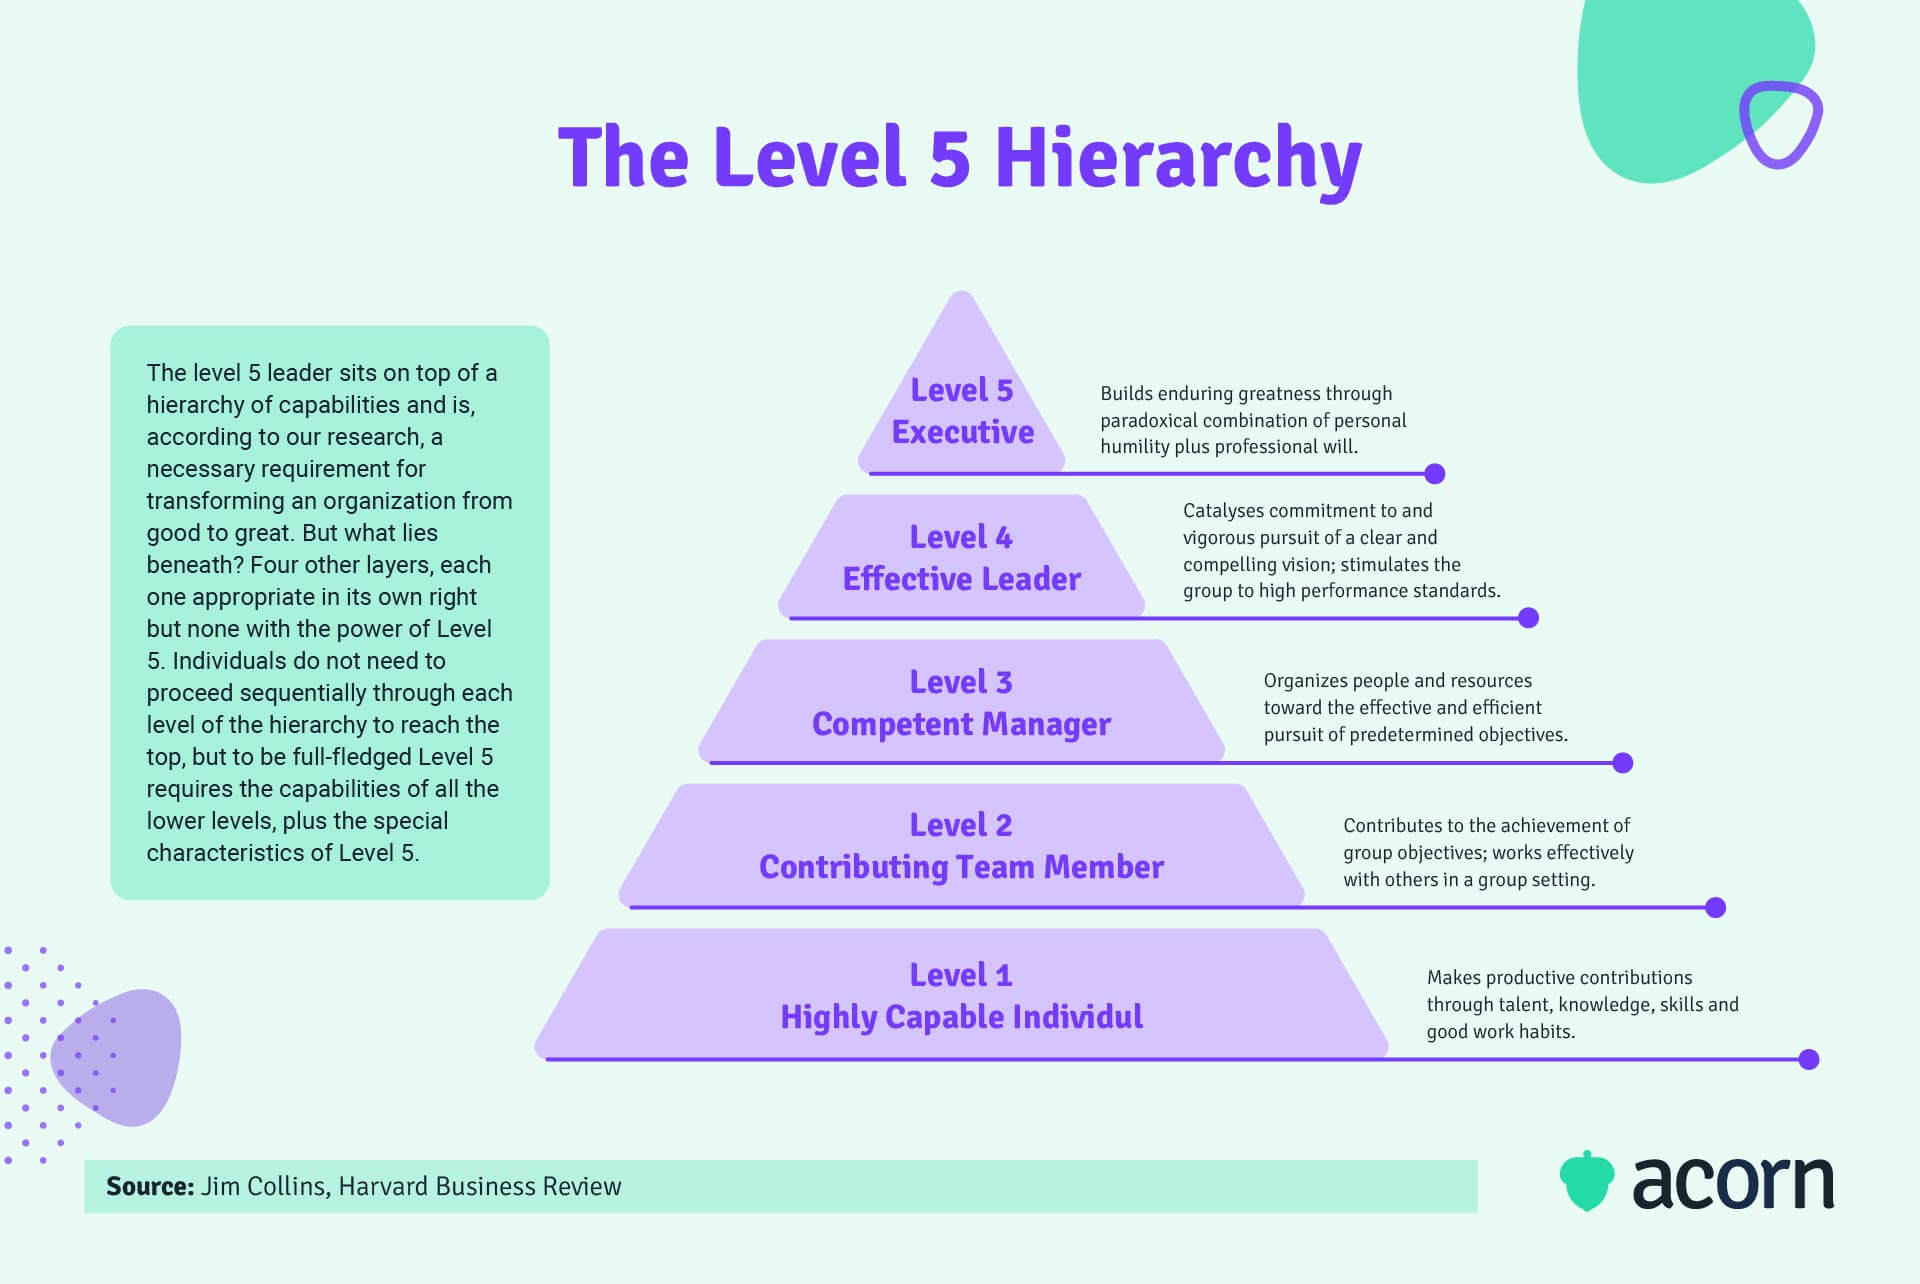 Jim Collins' level 5 hierarchy